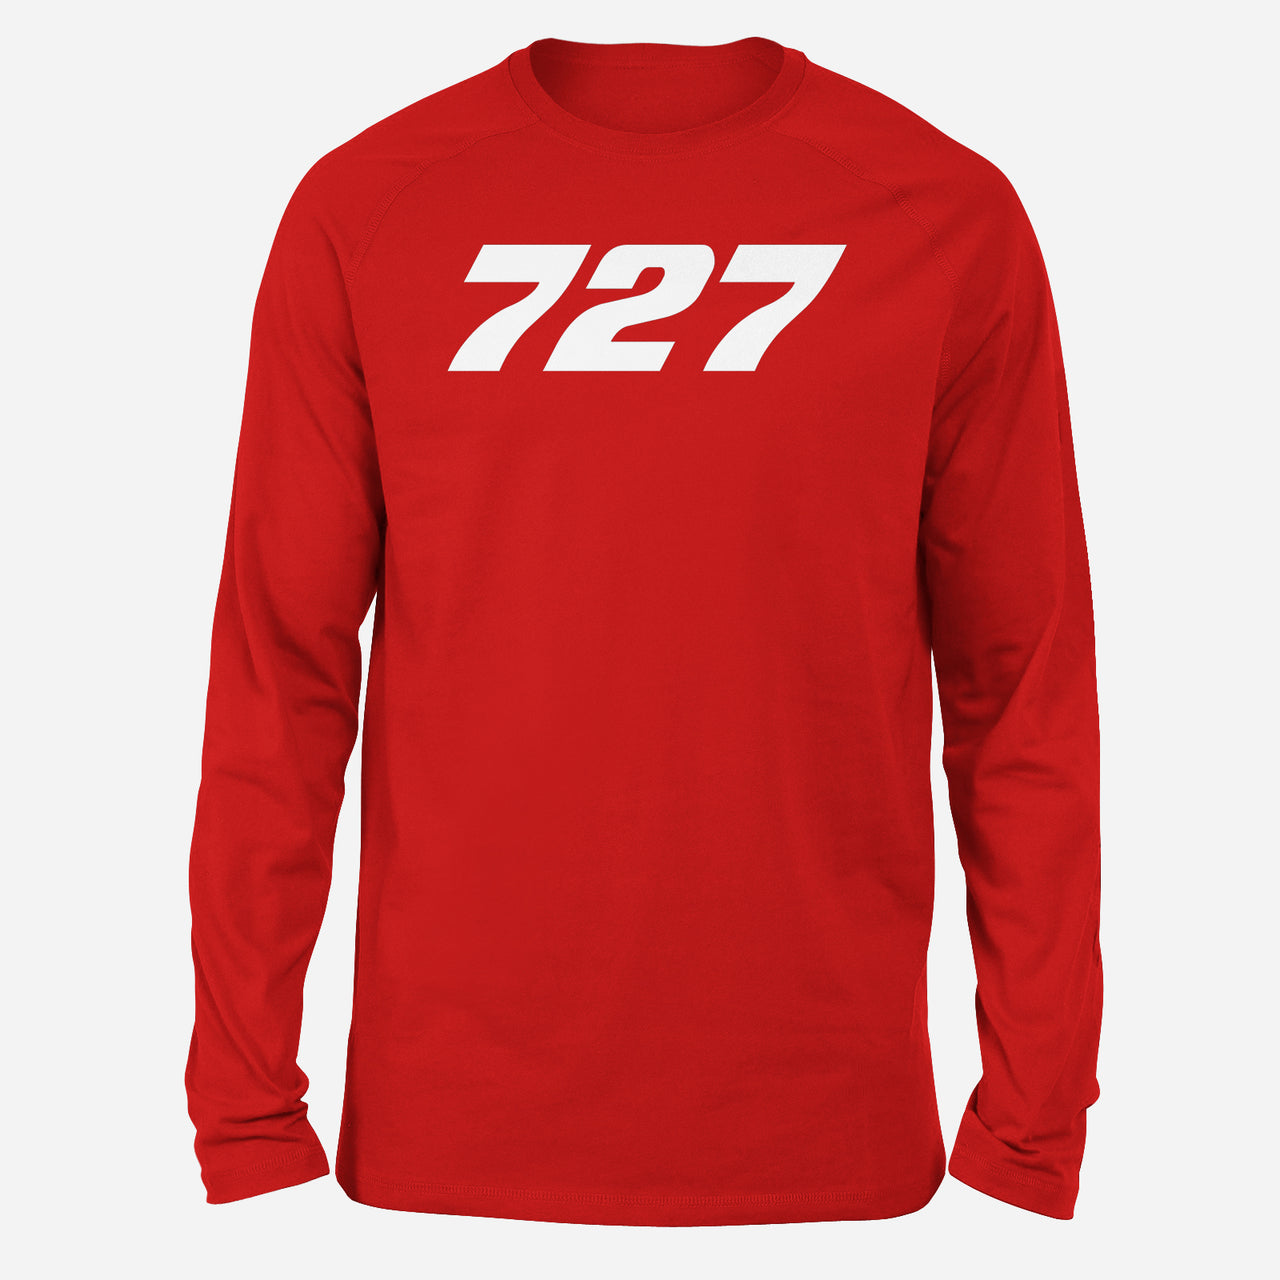 727 Flat Text Designed Long-Sleeve T-Shirts